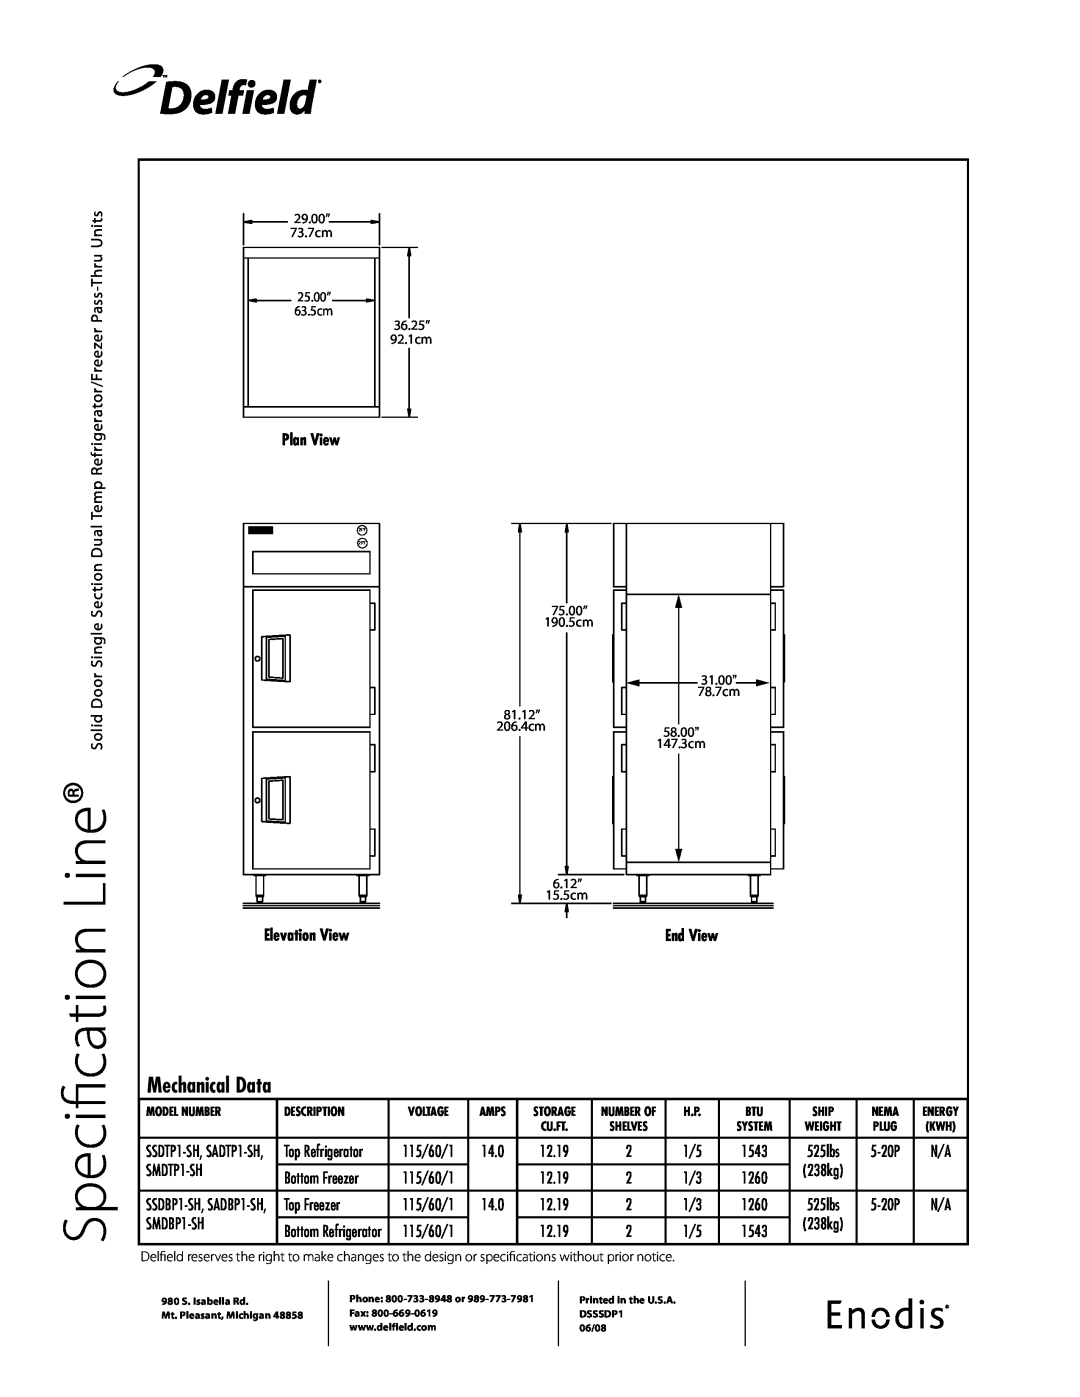 Delfield SSDP1-SH Specification, Delfield, Mechanical Data, Refrigerator/Freezer Pass-Thru Units, Plan View, End View 